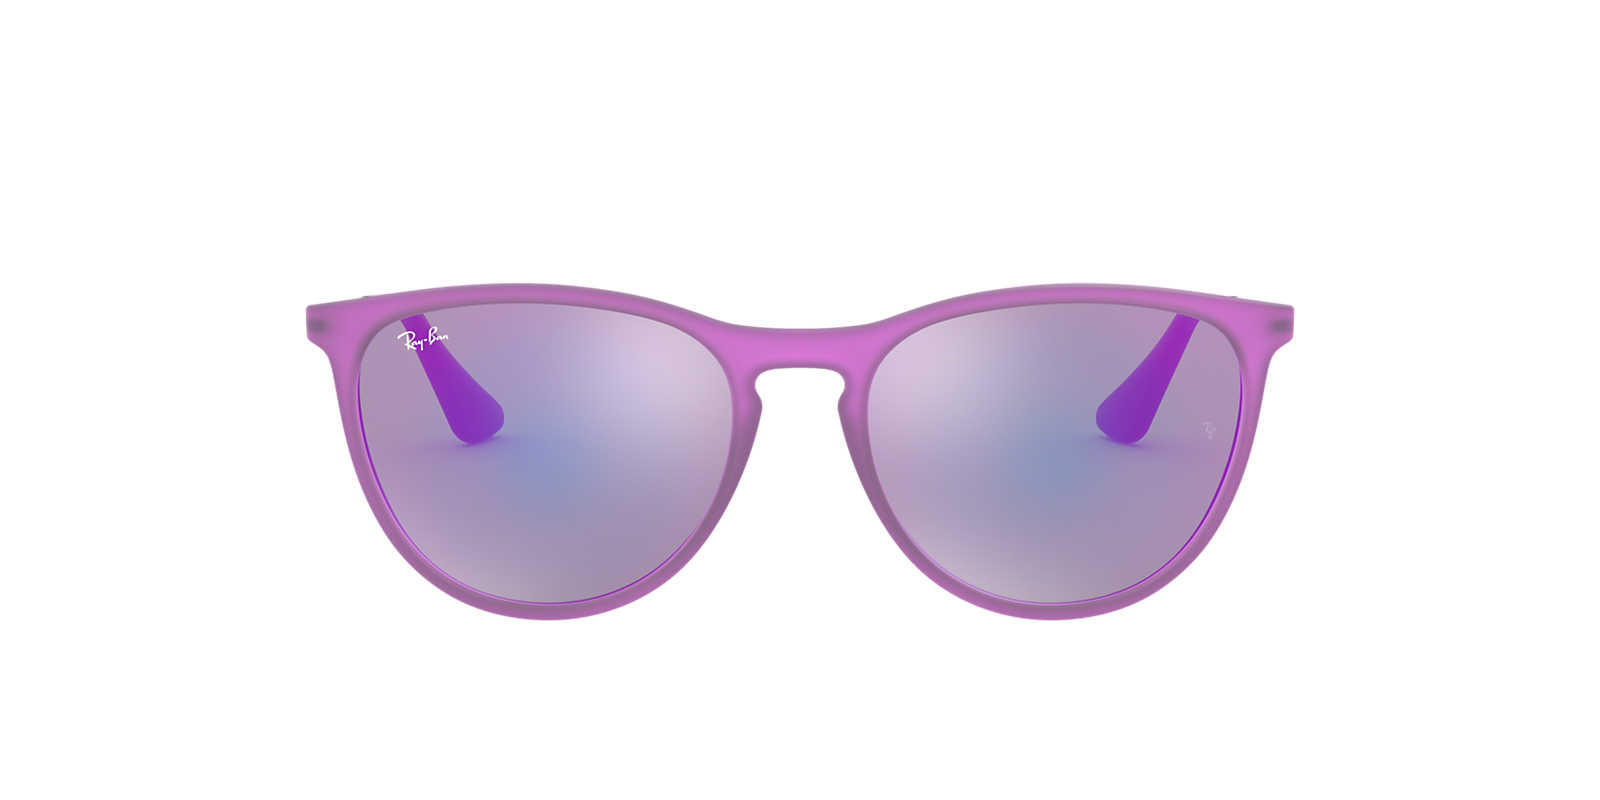 2019 cheap sunglasses ray ban online 2019